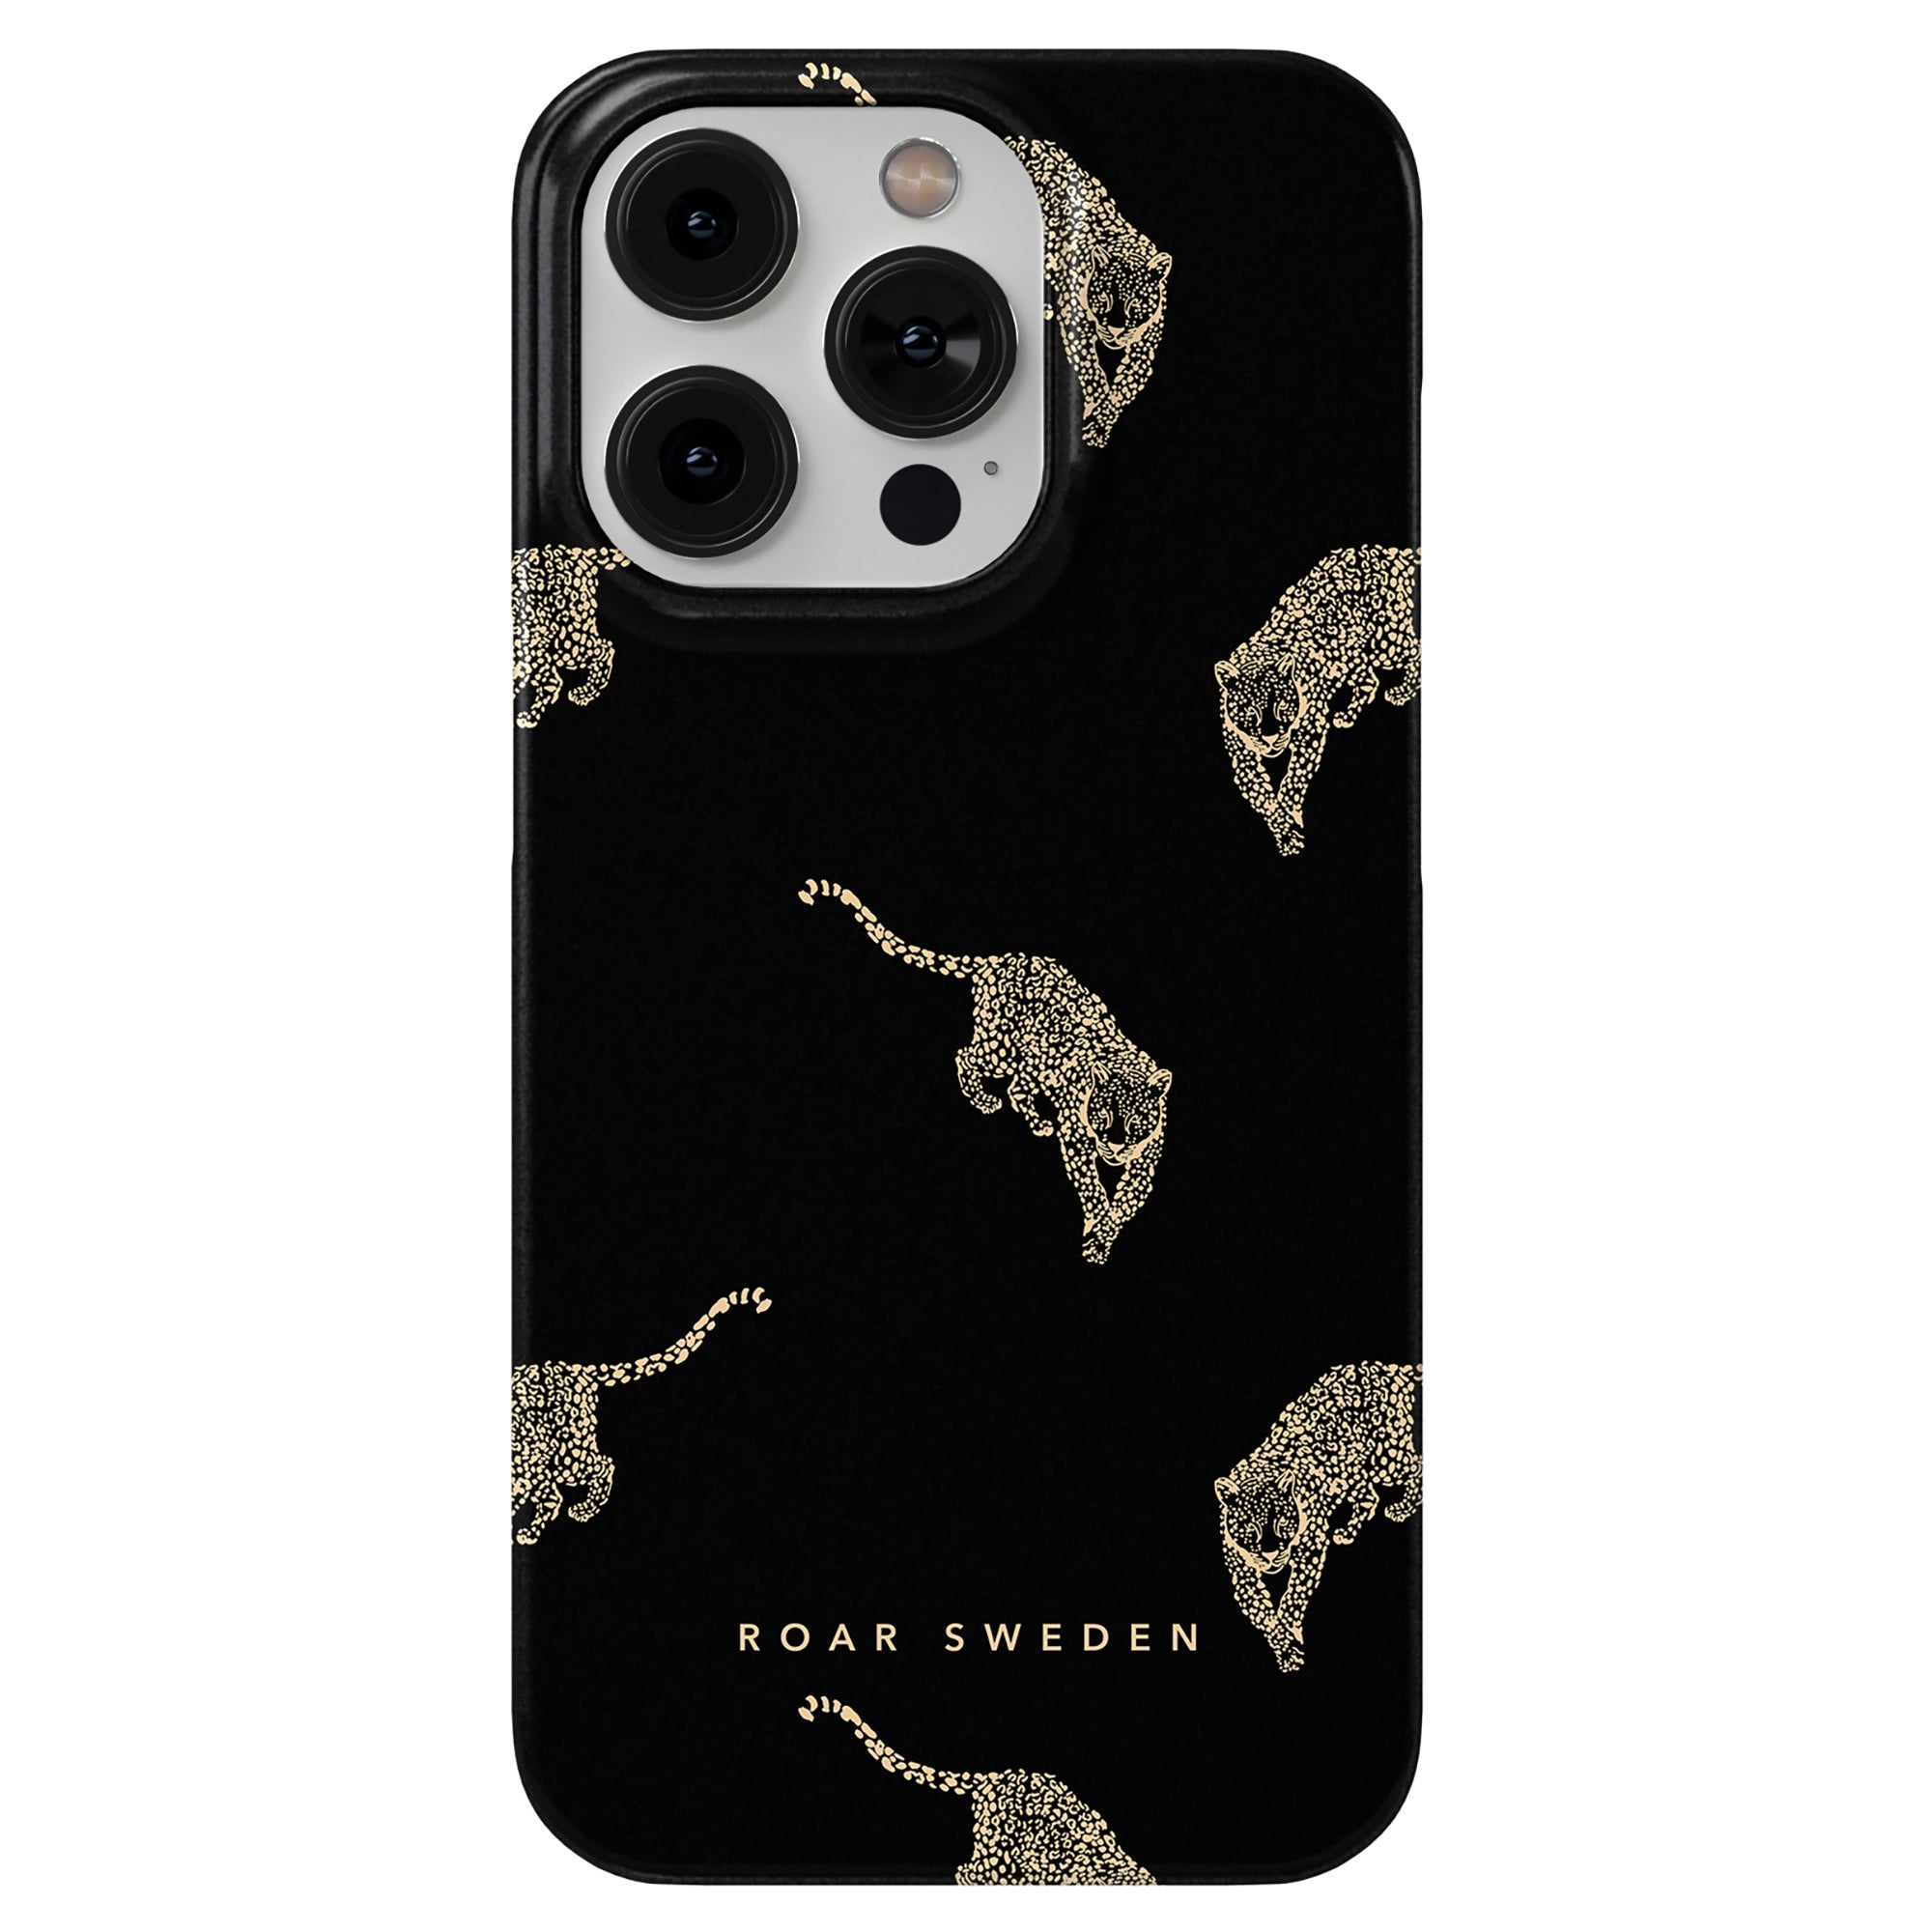 An elegant Kitty Black - Slim case with a leopard pattern.